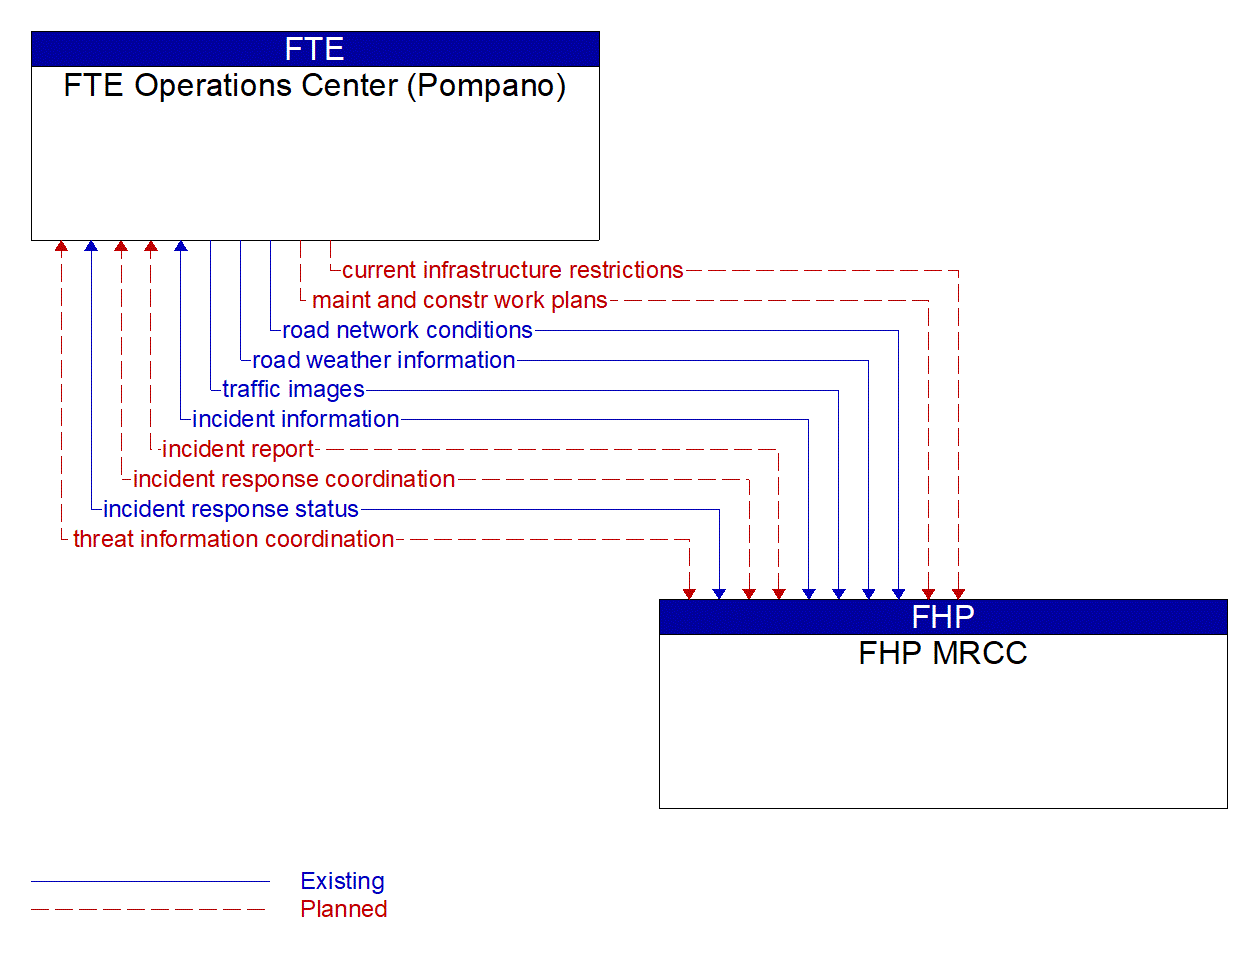 Architecture Flow Diagram: FHP MRCC <--> FTE Operations Center (Pompano)